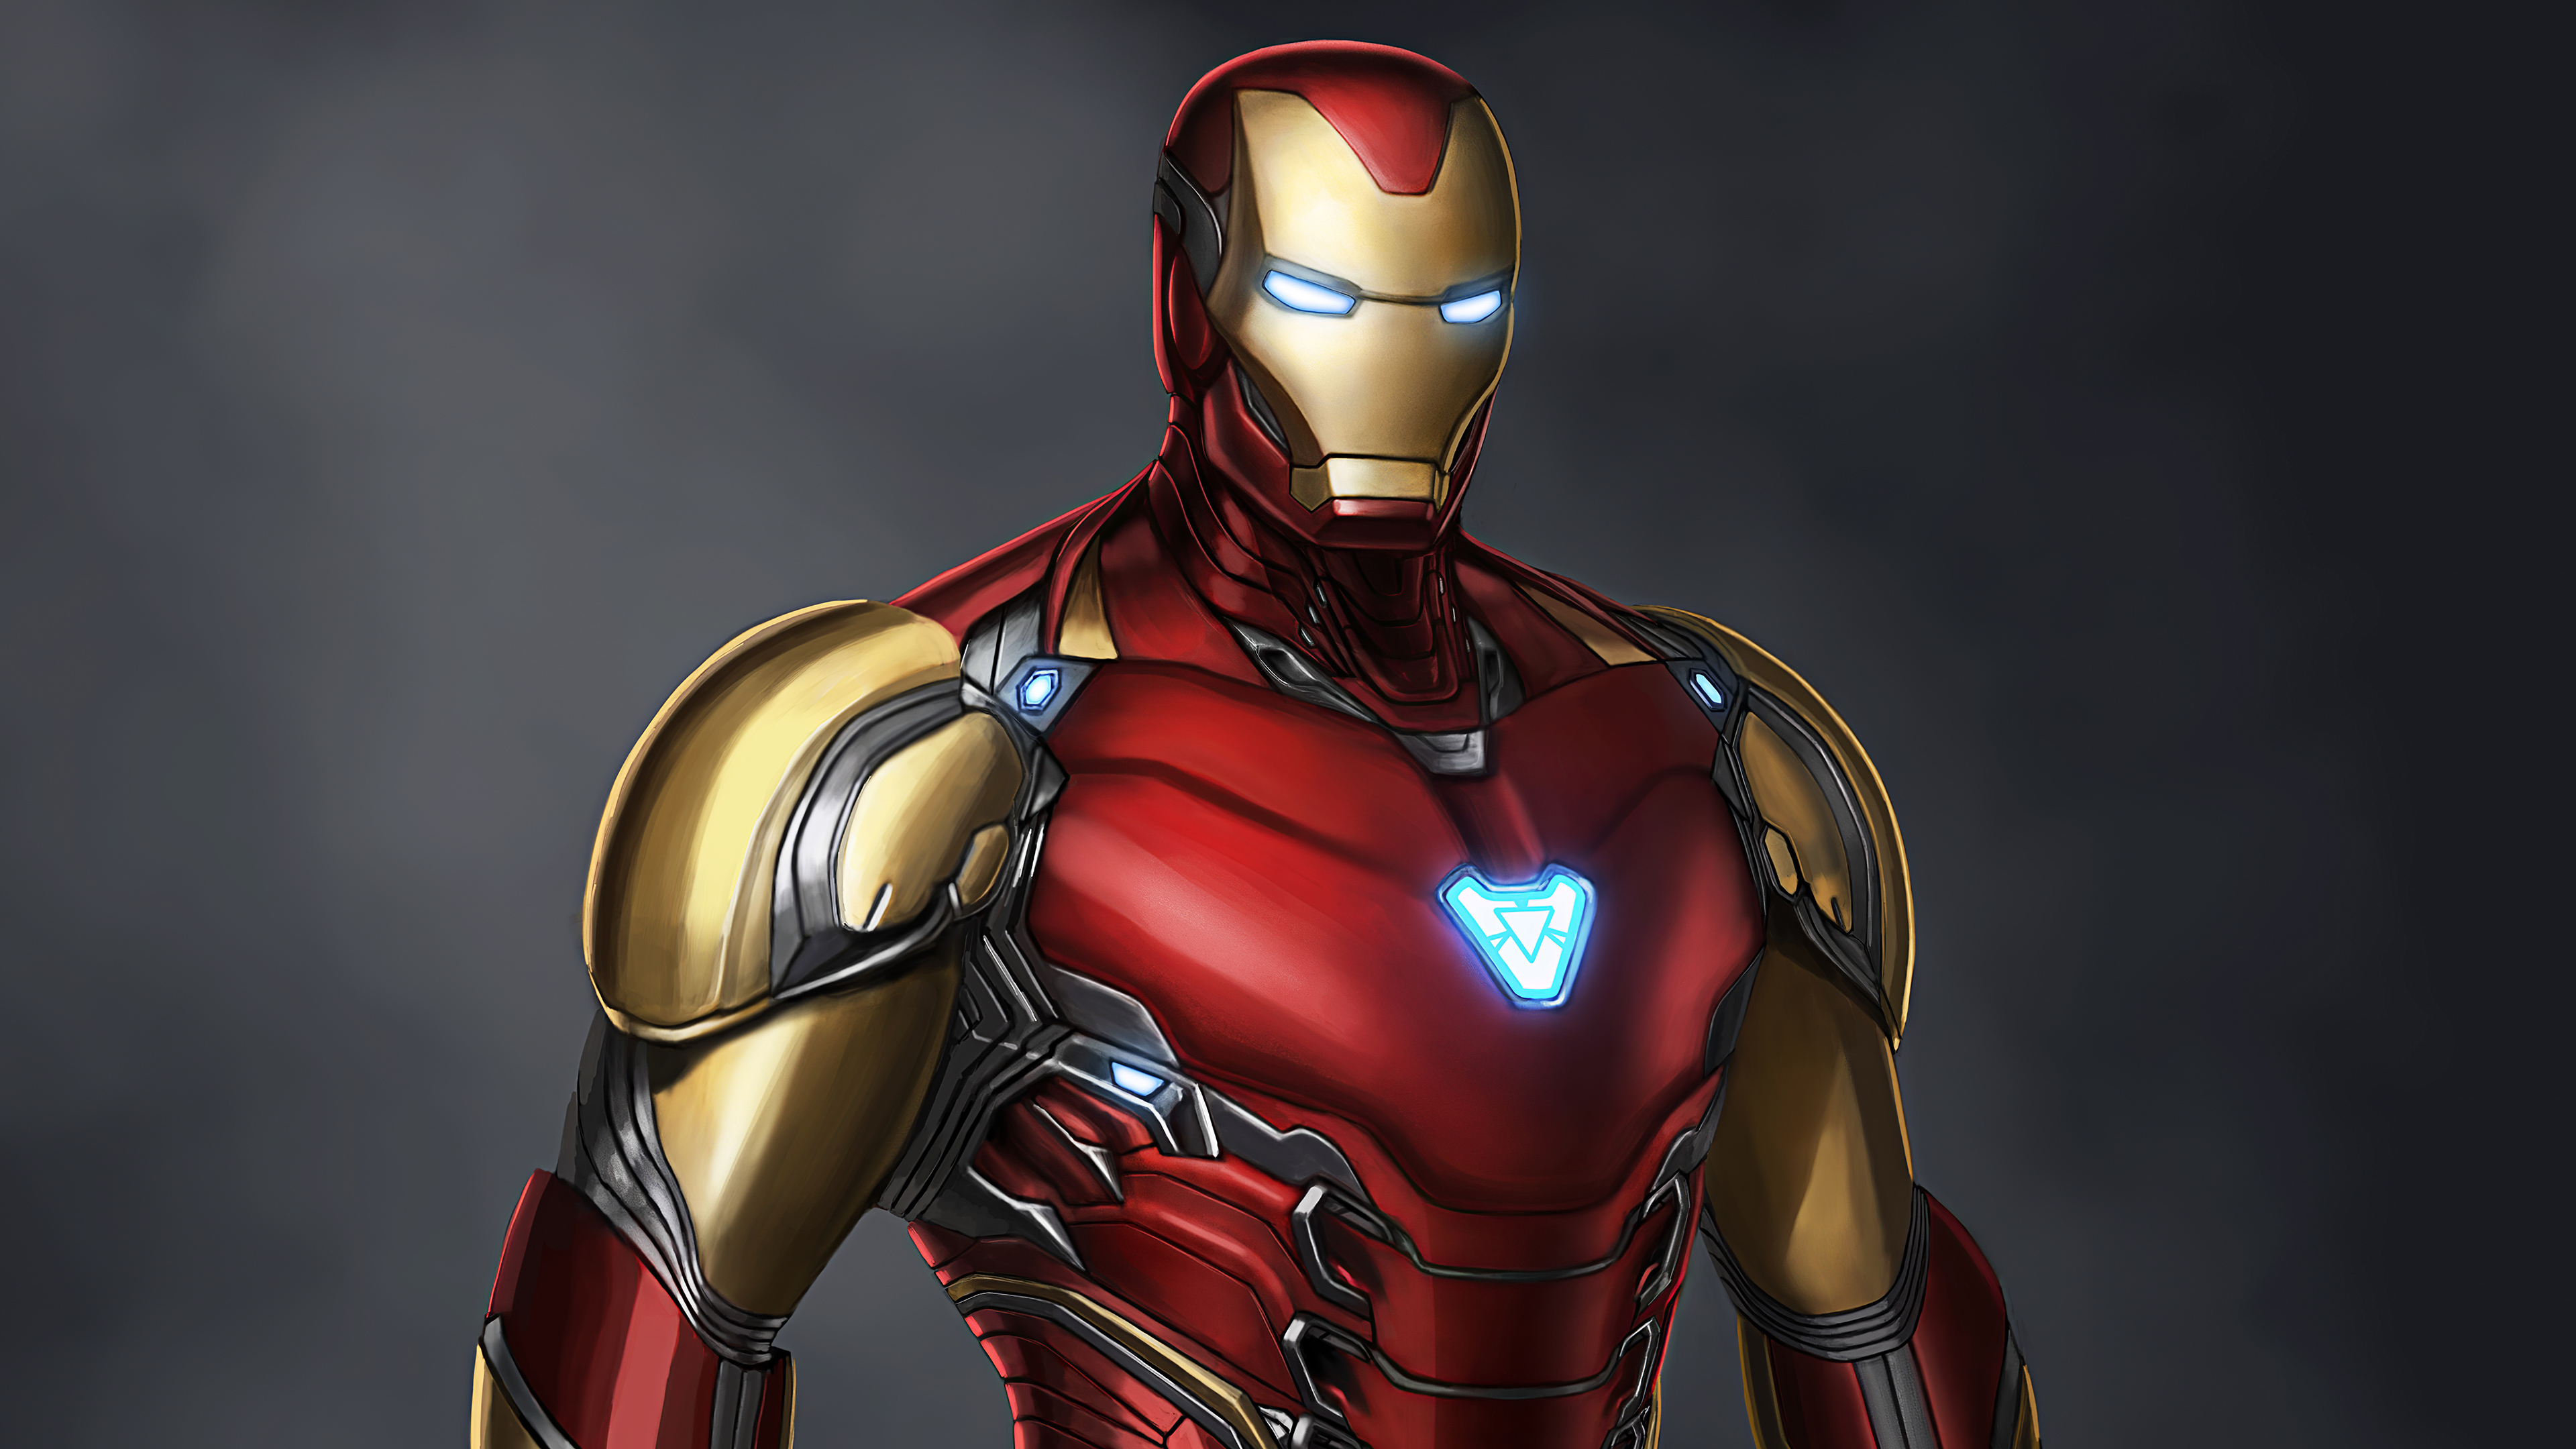 Iron Man Concept Art superheroes wallpapers, iron man wallpapers, hd